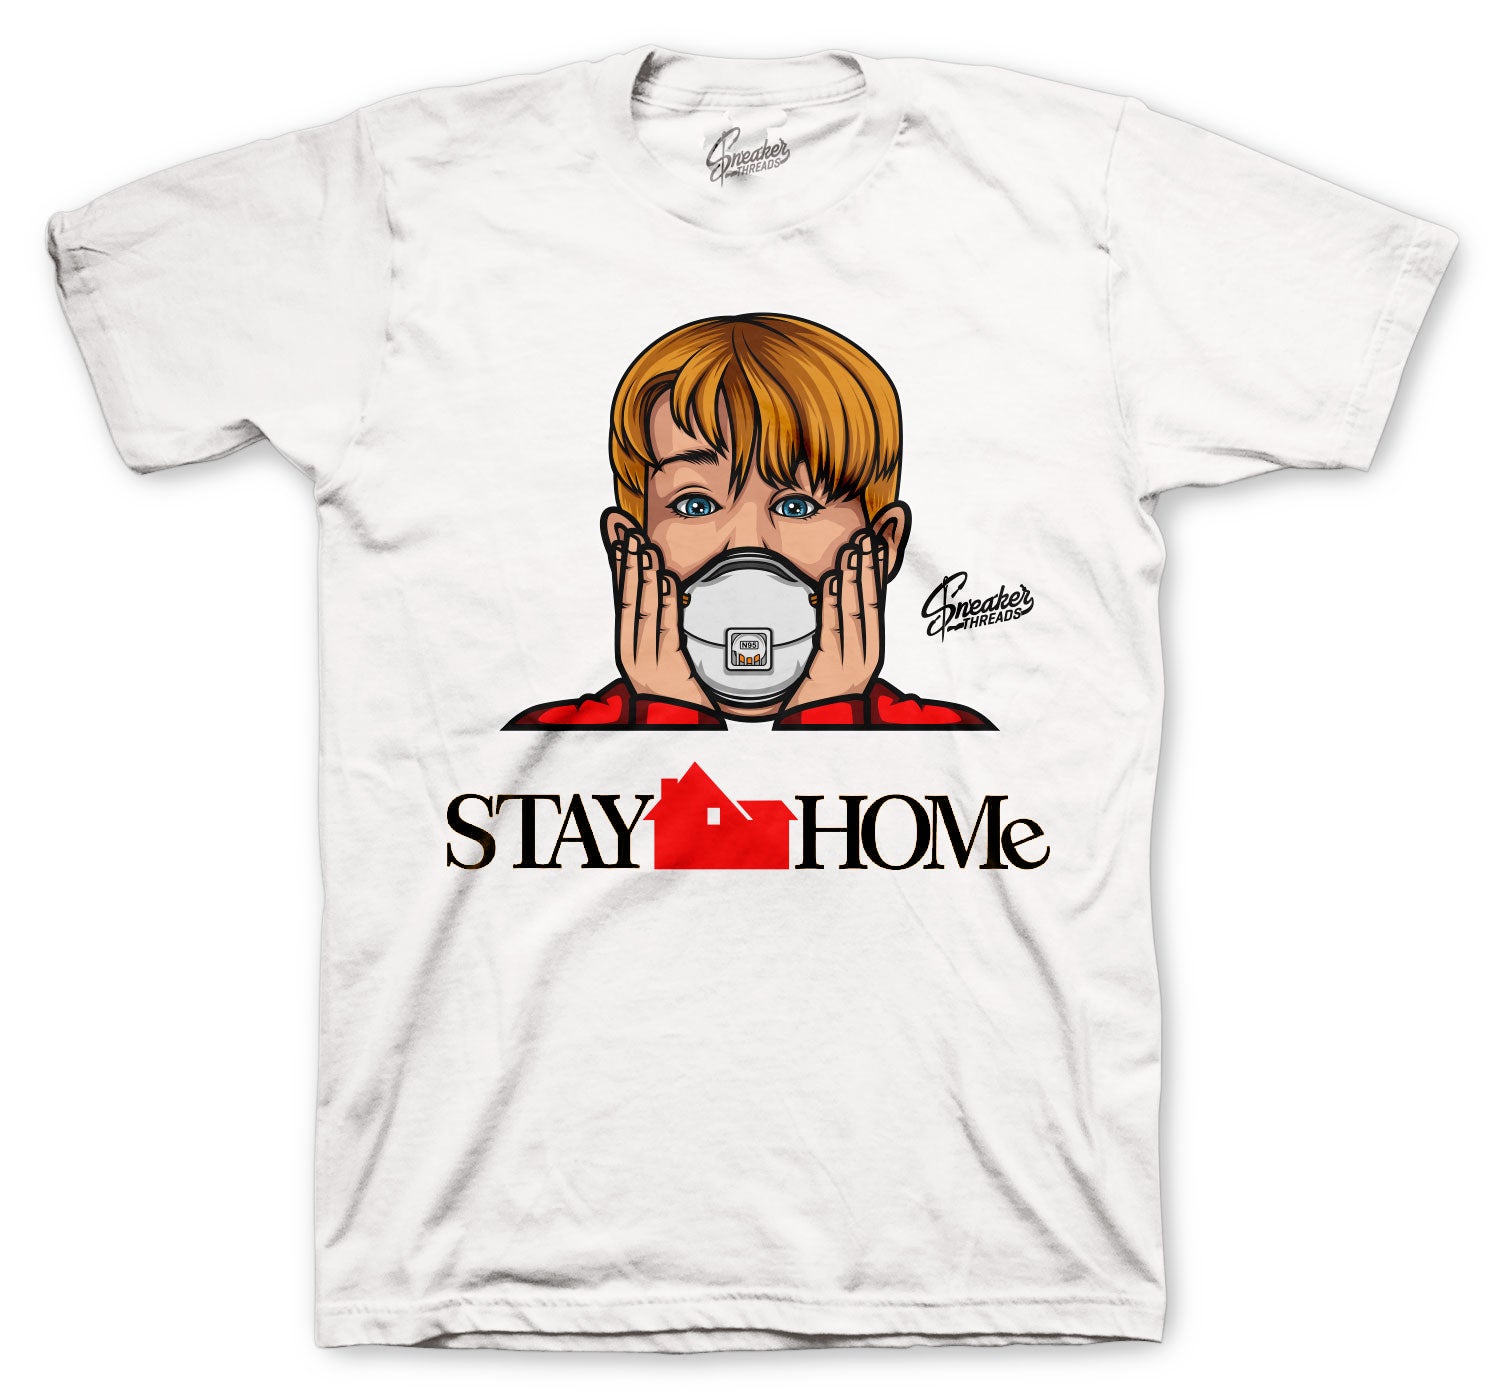 Retro 4 Red Metallic Shirt - Stay Home - White